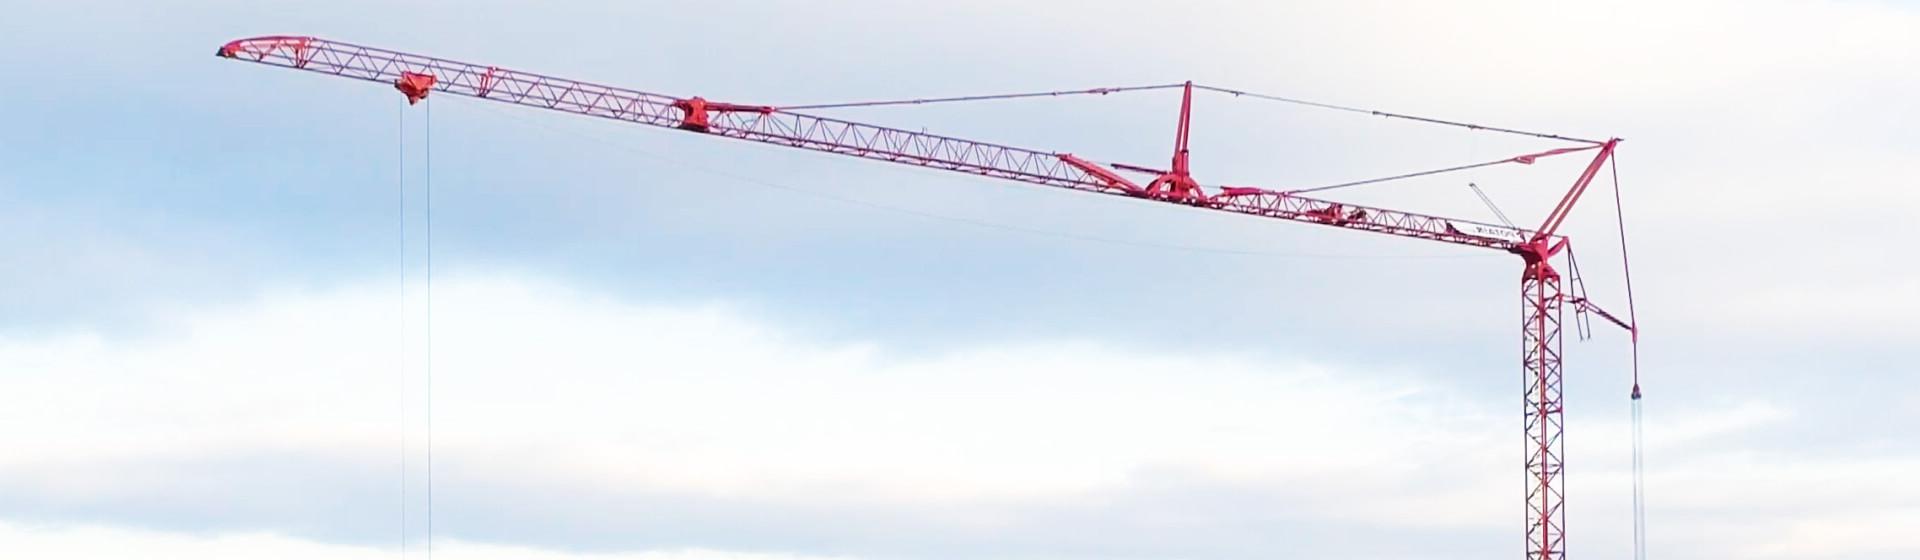 Cedar-Run-Construction-replaces-fleet-of-telehandlers-with-one-Potain-self-erecting-crane-1.jpg